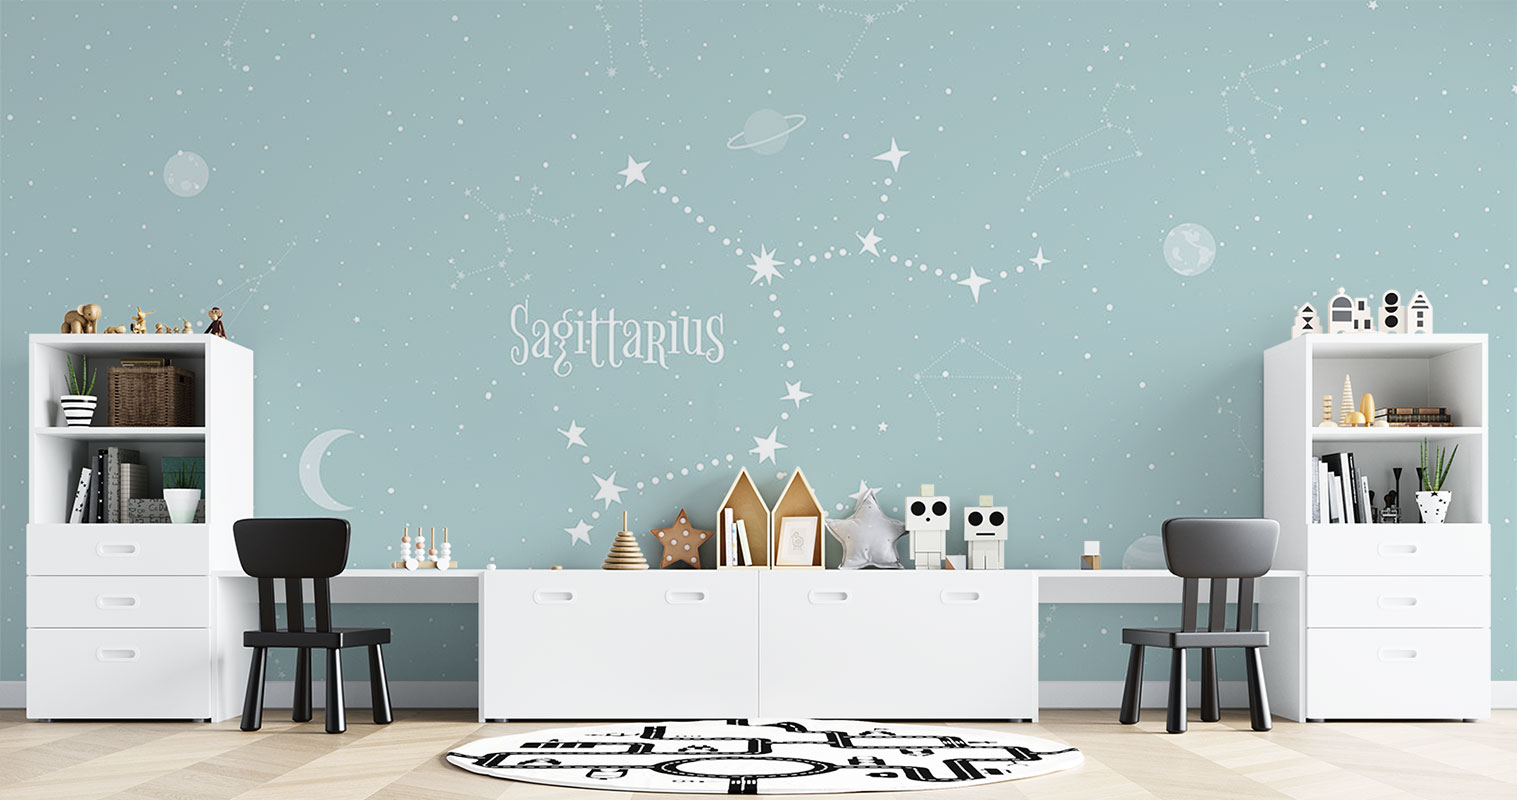 Horoscope Sagittarius – Light Blue